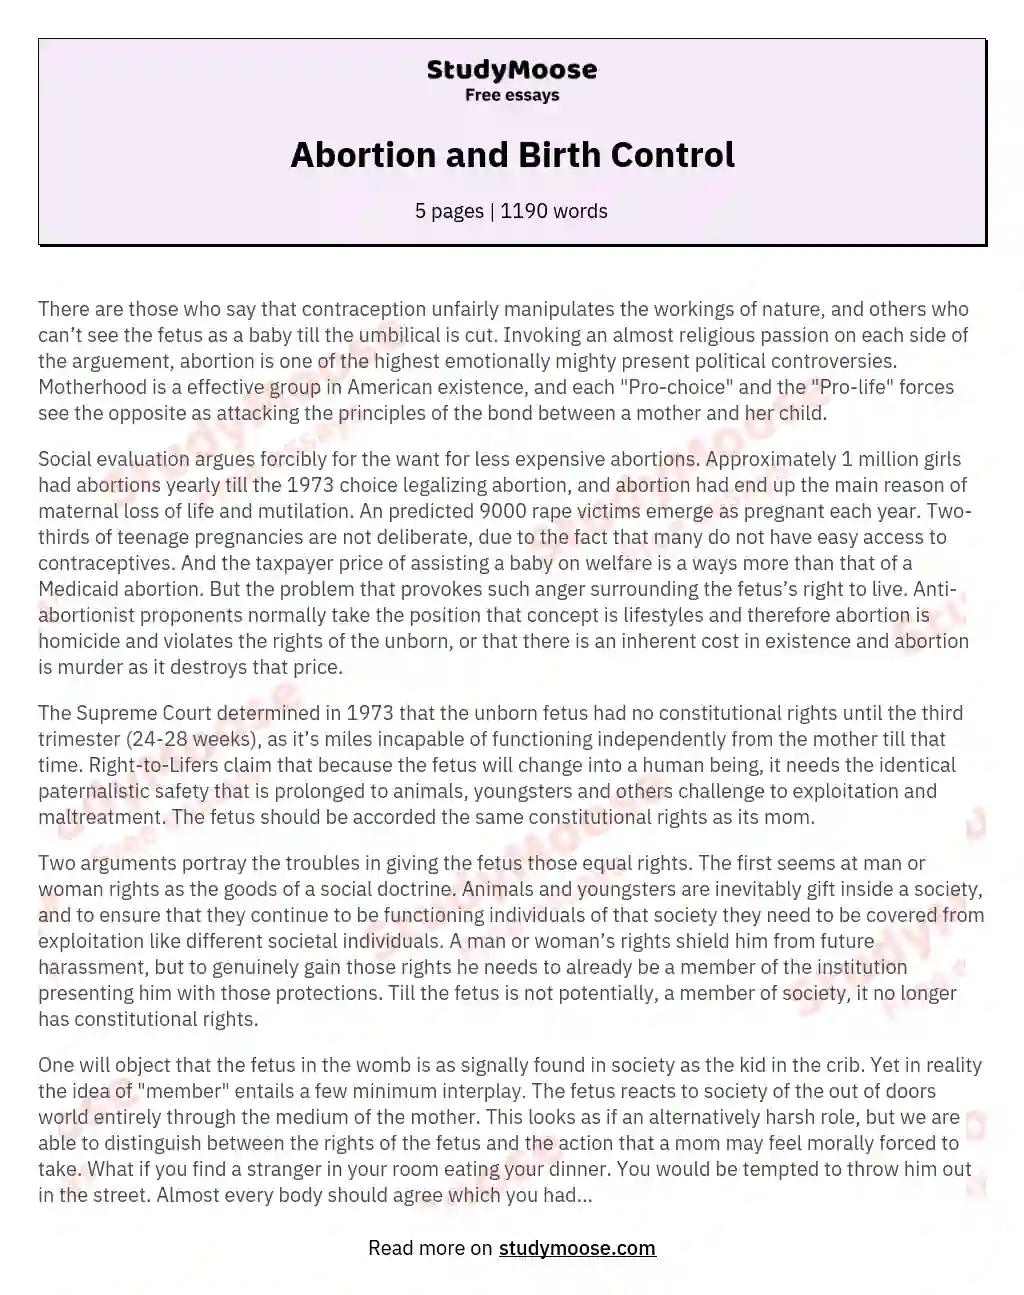 Abortion and Birth Control essay